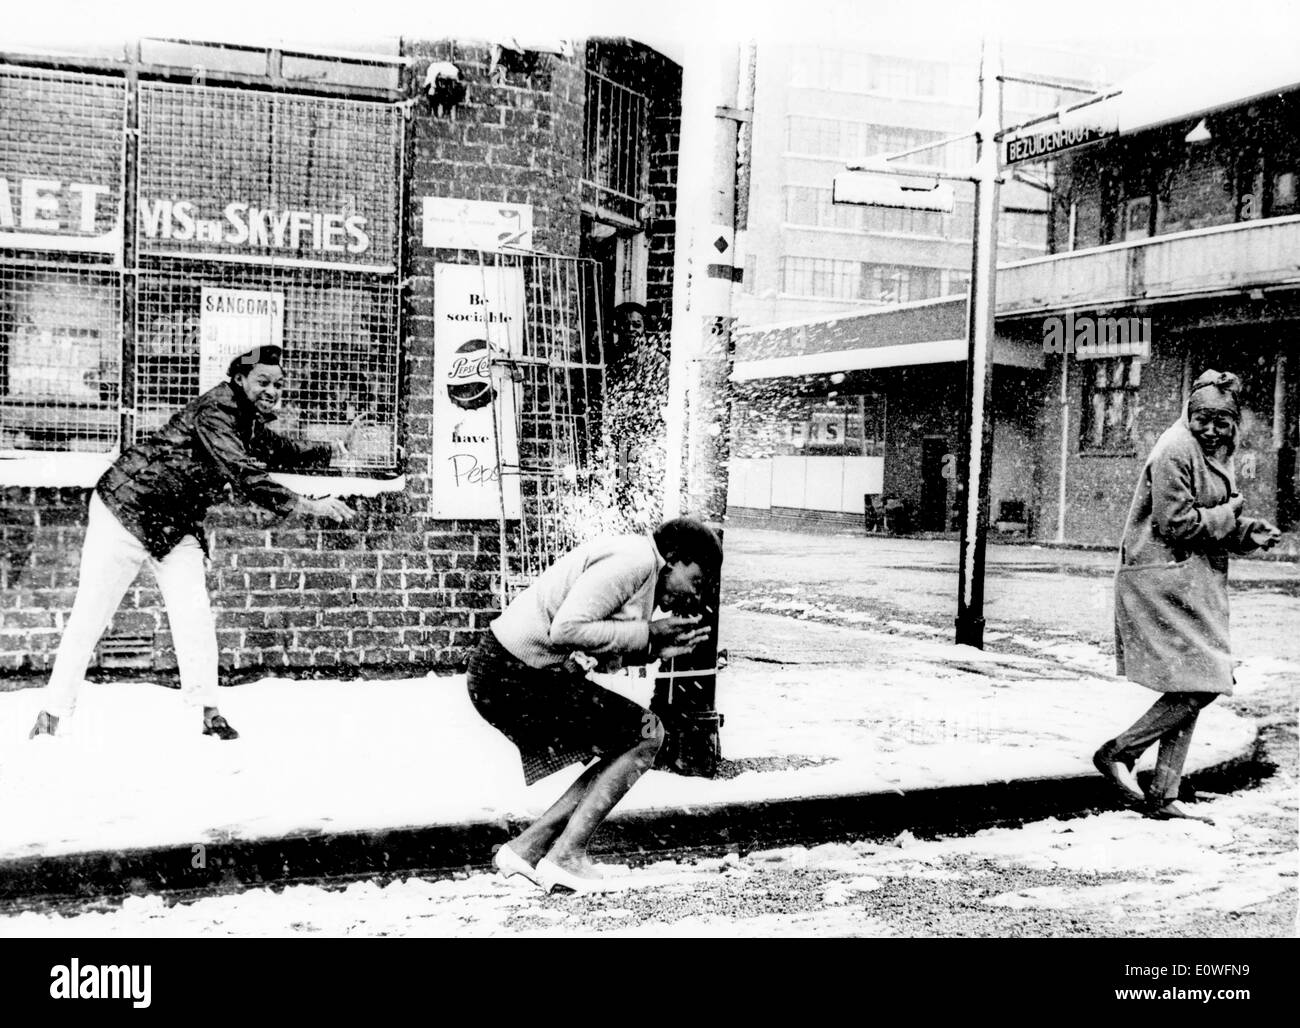 La nieve caída en Johannesburgo Foto de stock